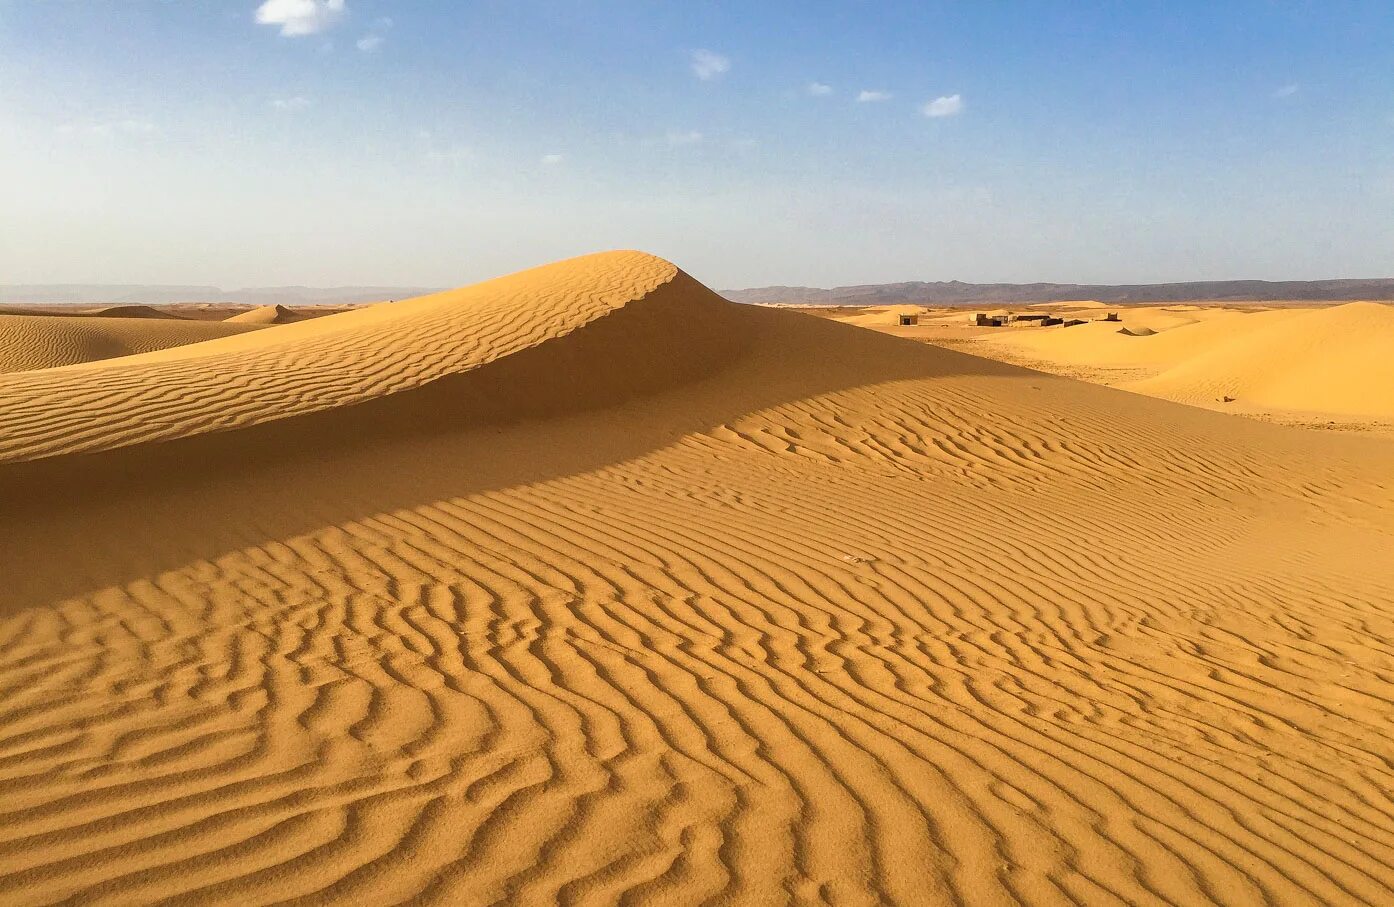 Барханы ханы. Бархан Сарыкум. Что такое дюны и Барханы в географии. Животный мир бархана Сарыкум. Золотой песок Барханы.